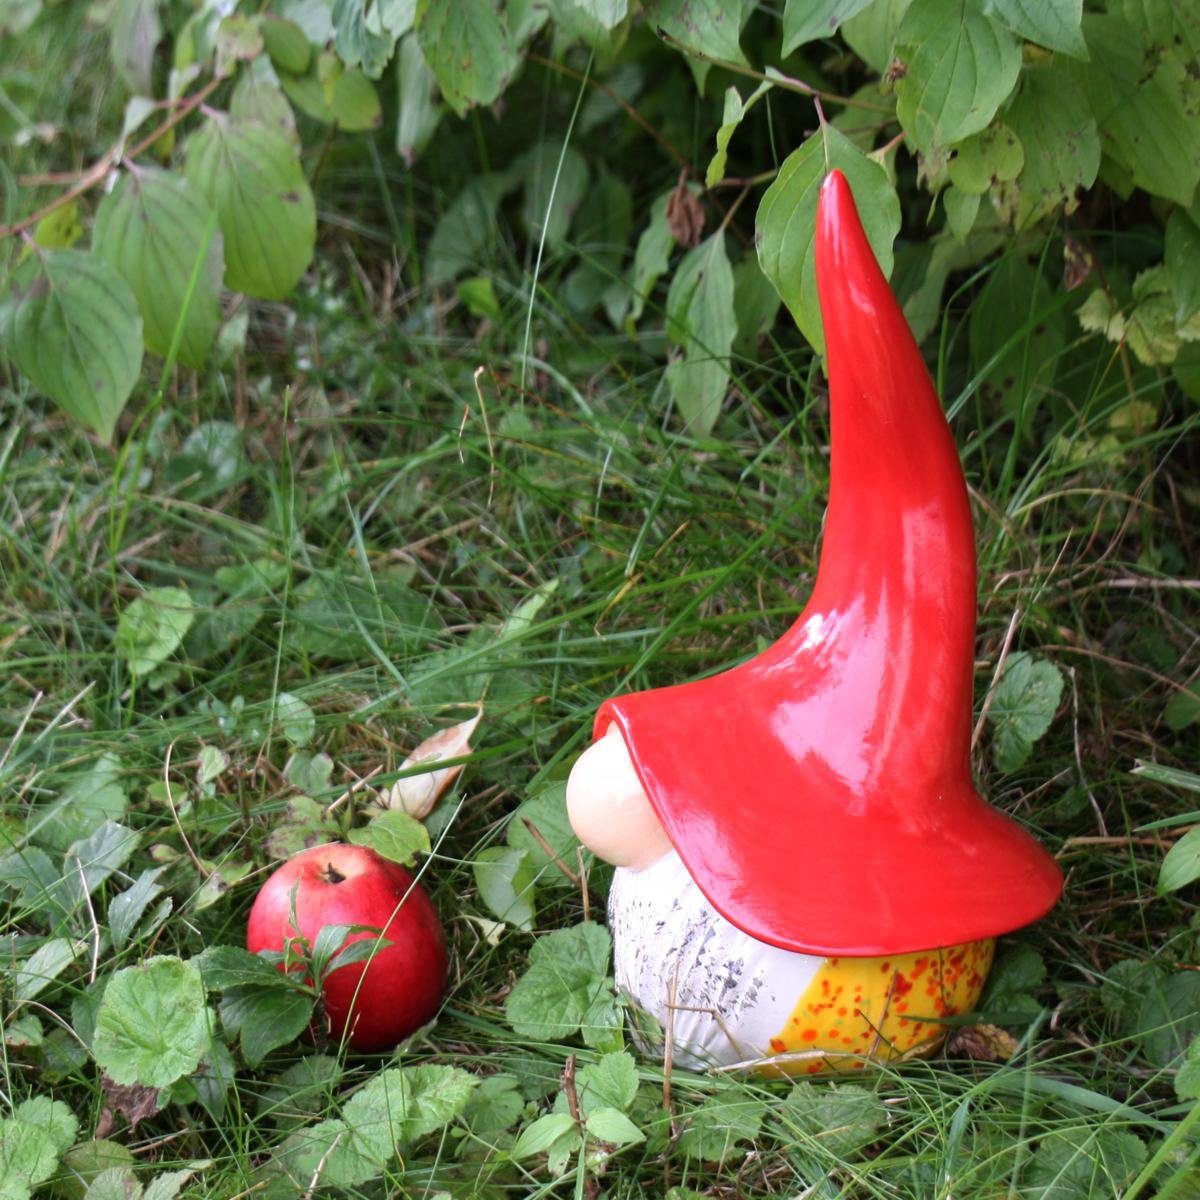 Tangoo H, Gartenfigur gelb Sprenkel und Tangoo rotem Hut cm mit (Stück) in 25 Keramik-Wichtel ca